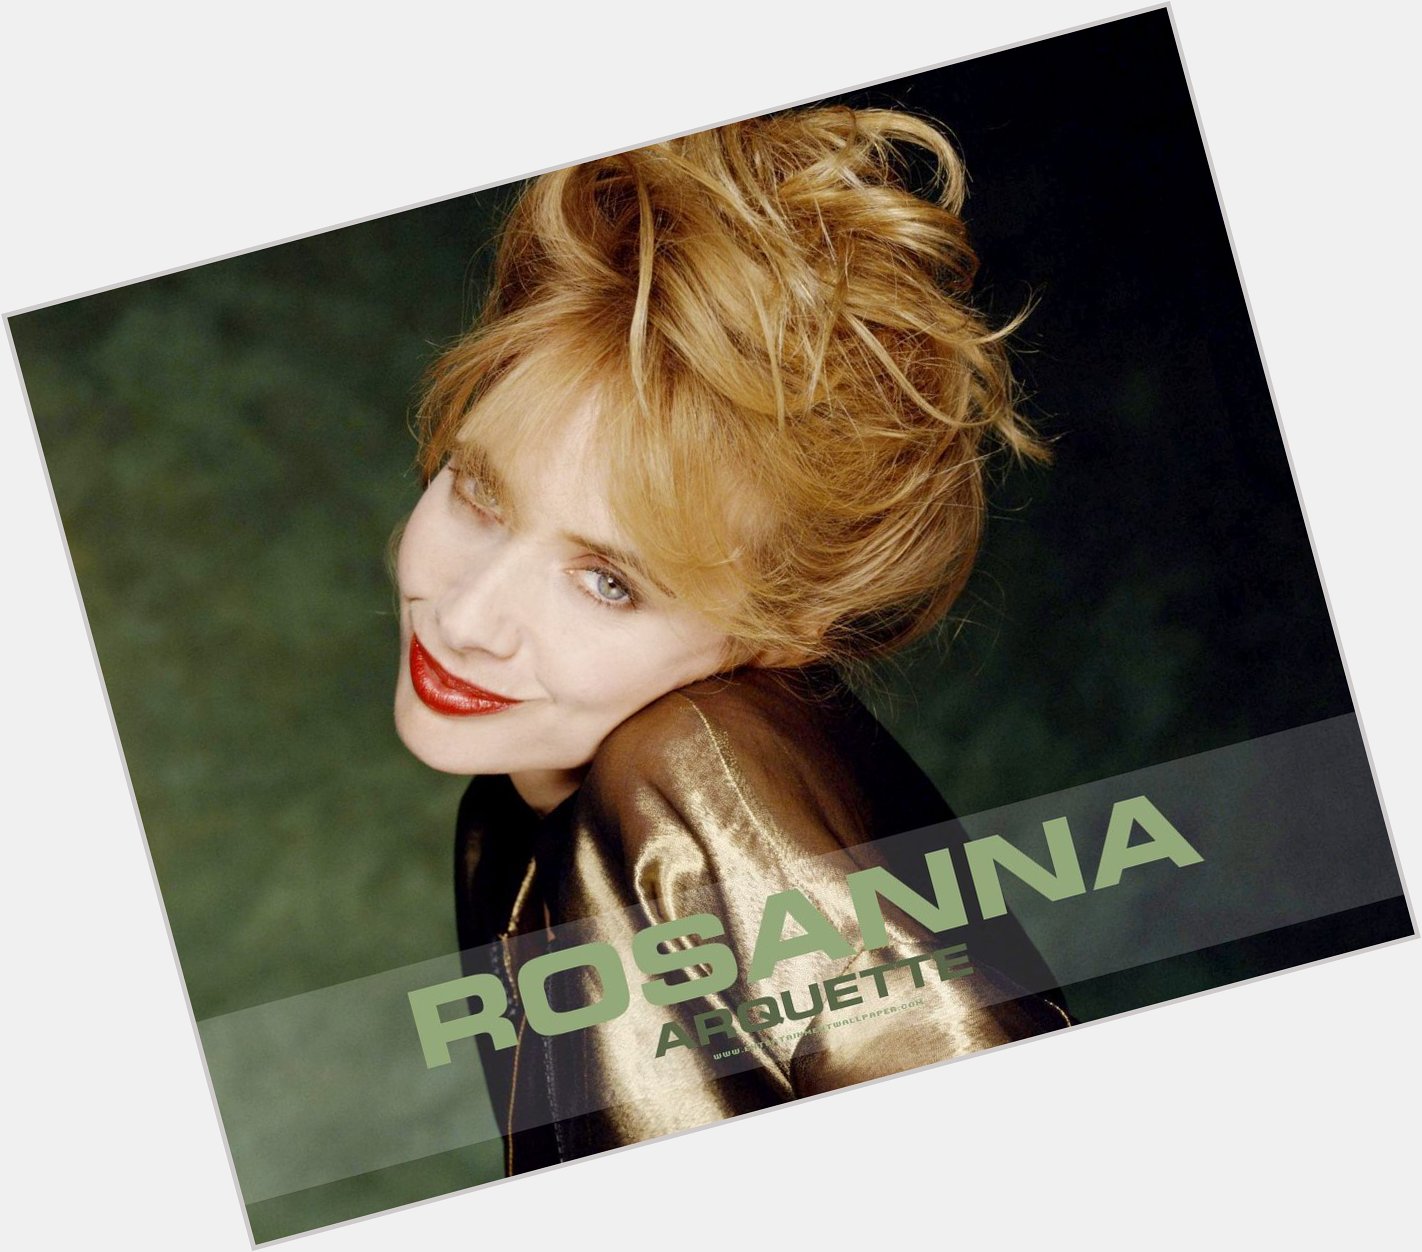 HAPPY BIRTHDAY ROSANNA ARQUETTE - 10. August 1959. New York City, New York, USA 